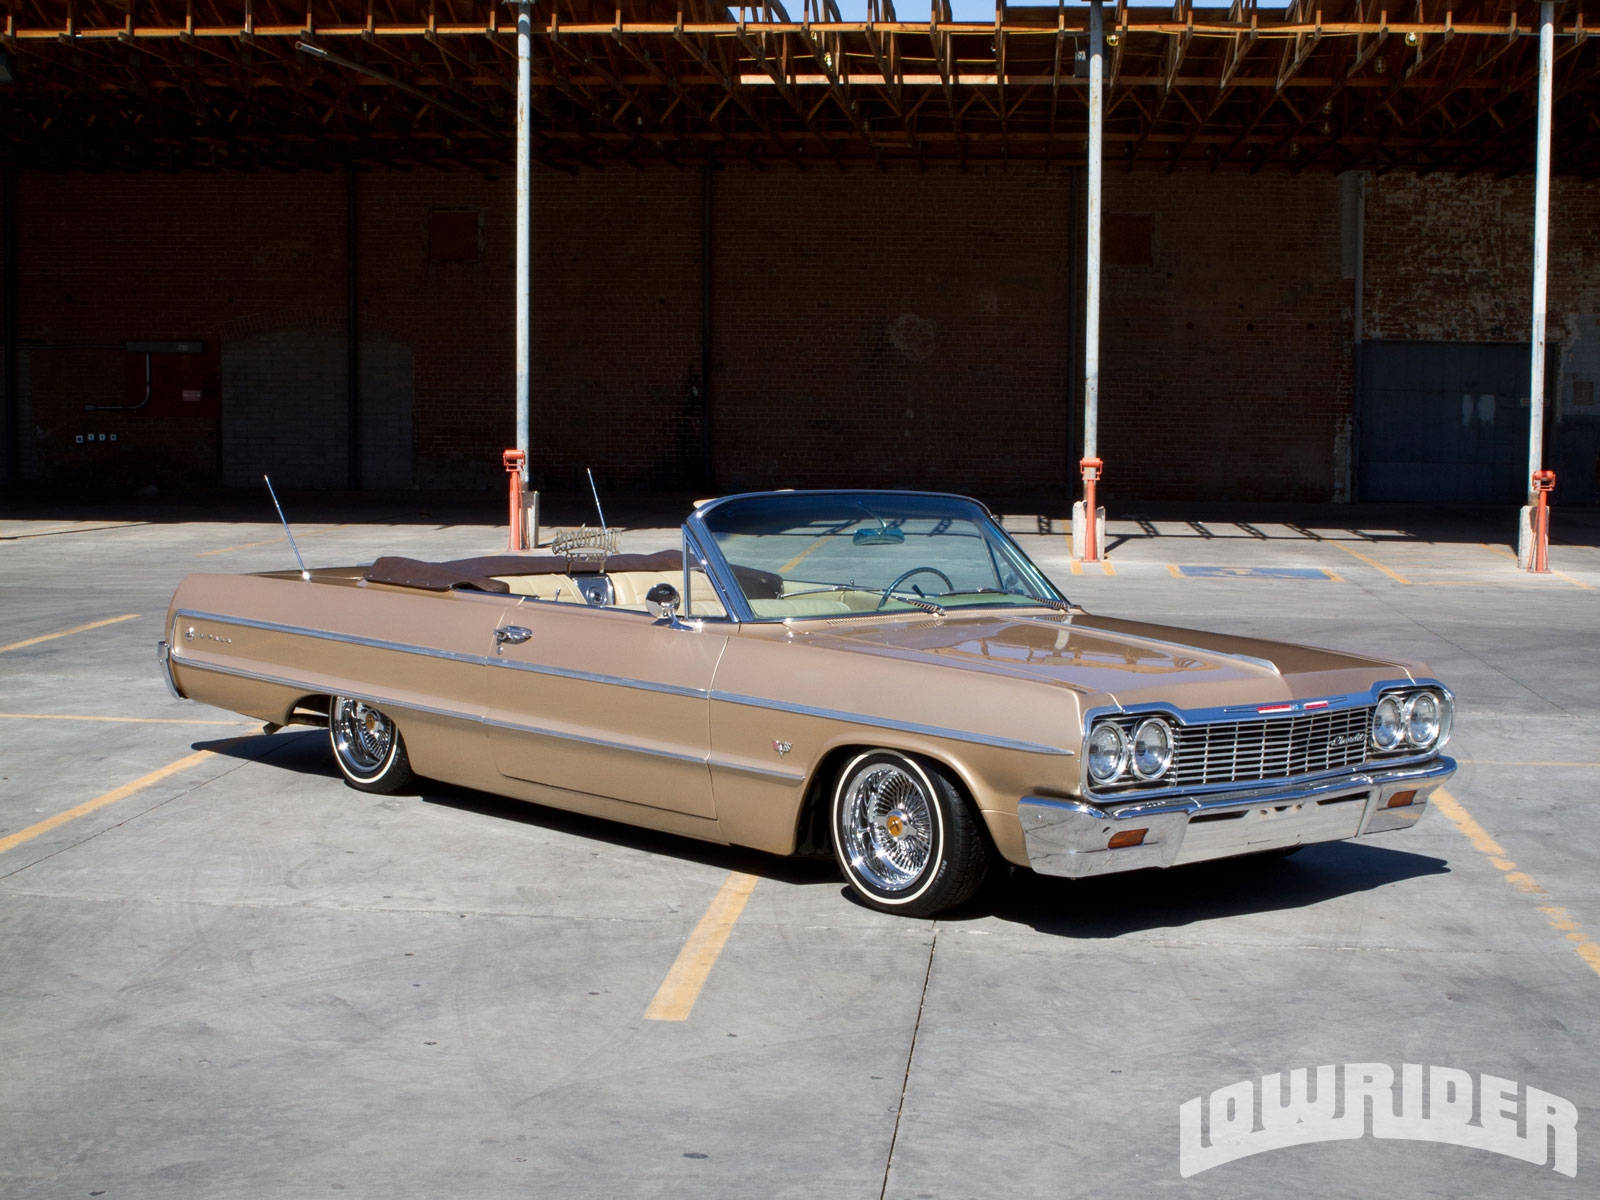 Lowrider Cream-colored 1964 Impala Background